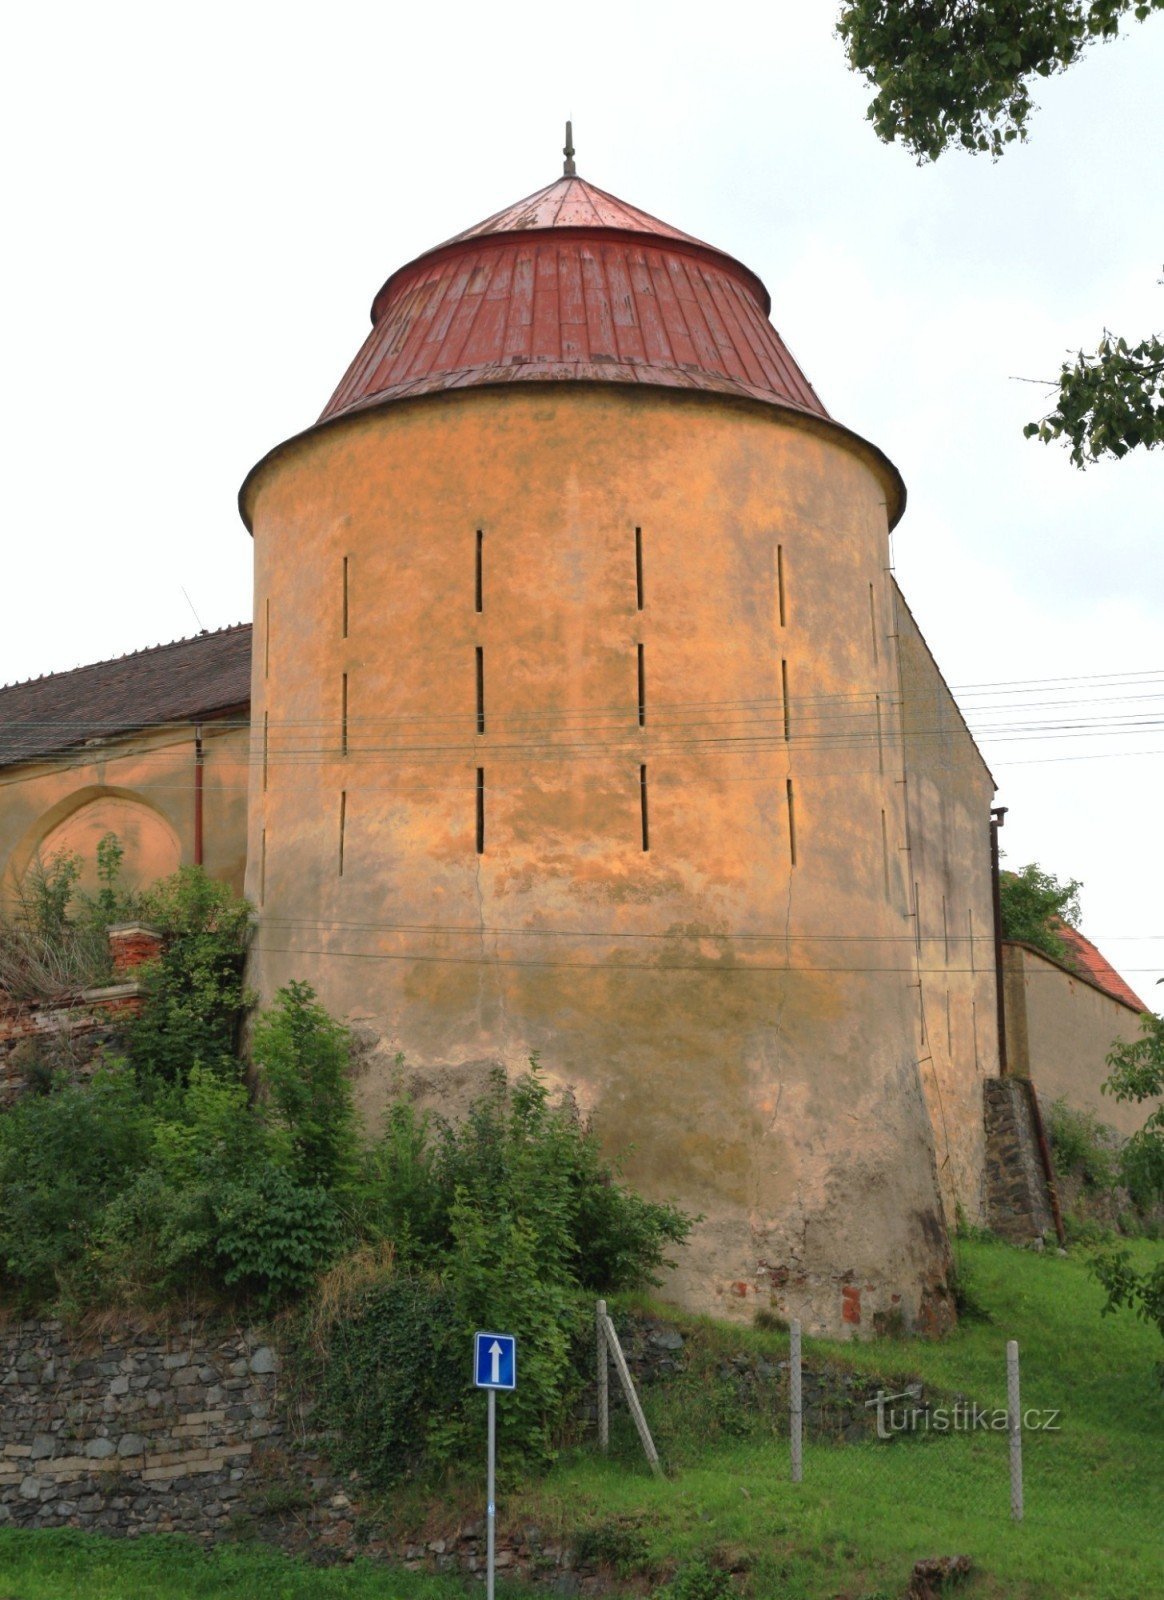 Letovice - kutni bastion dvorca